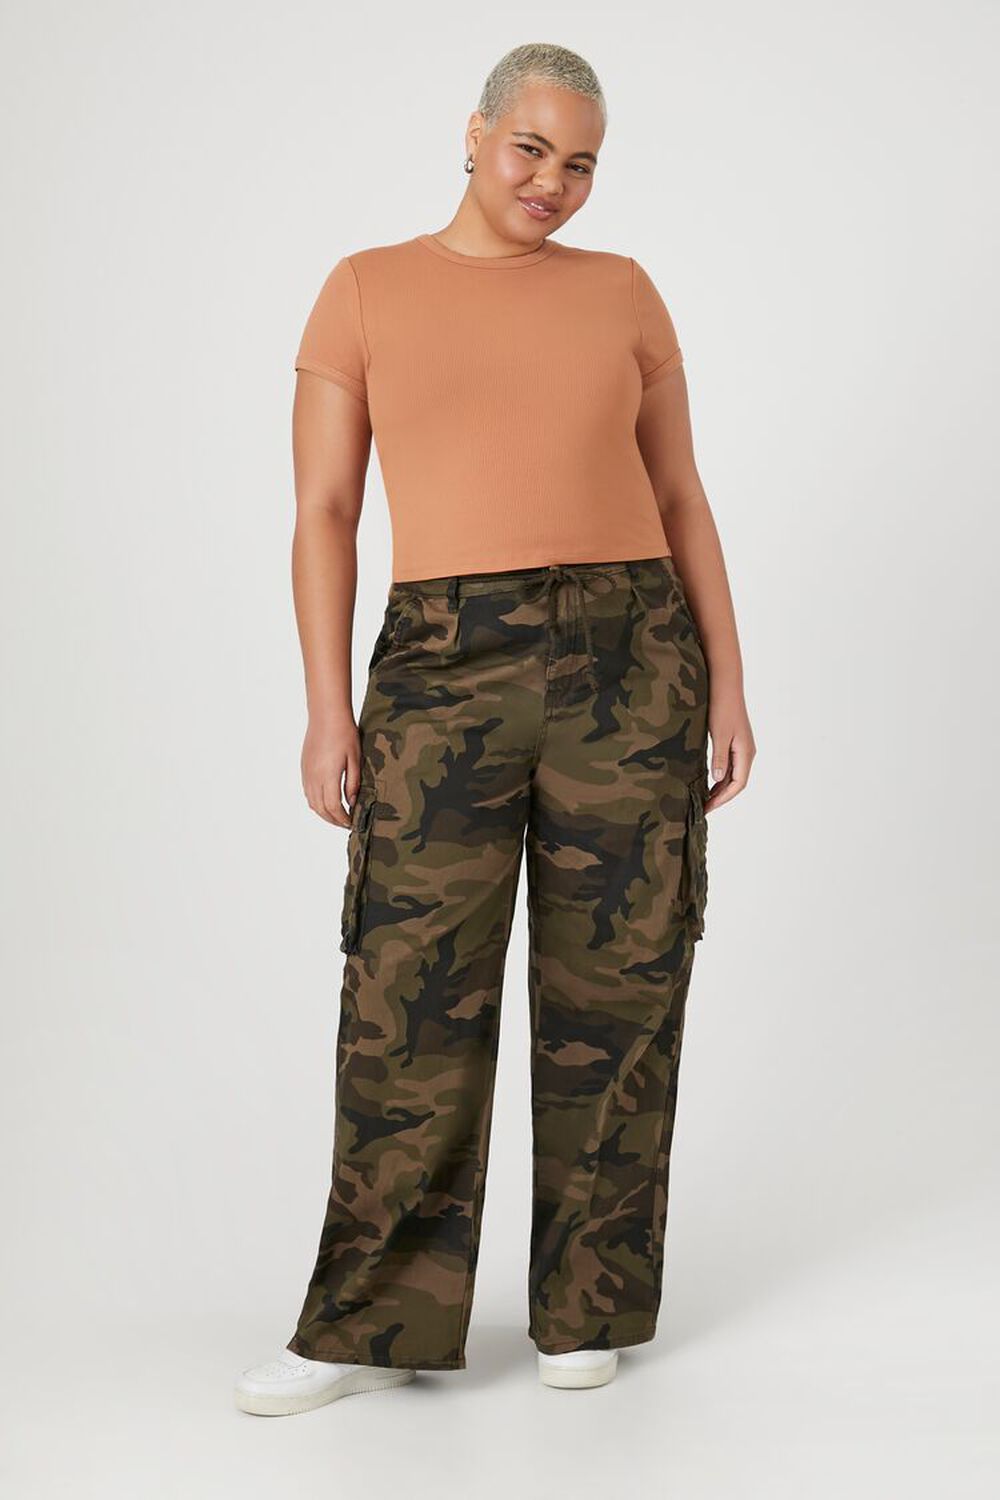 Plus Size Camouflage Cargo Pants